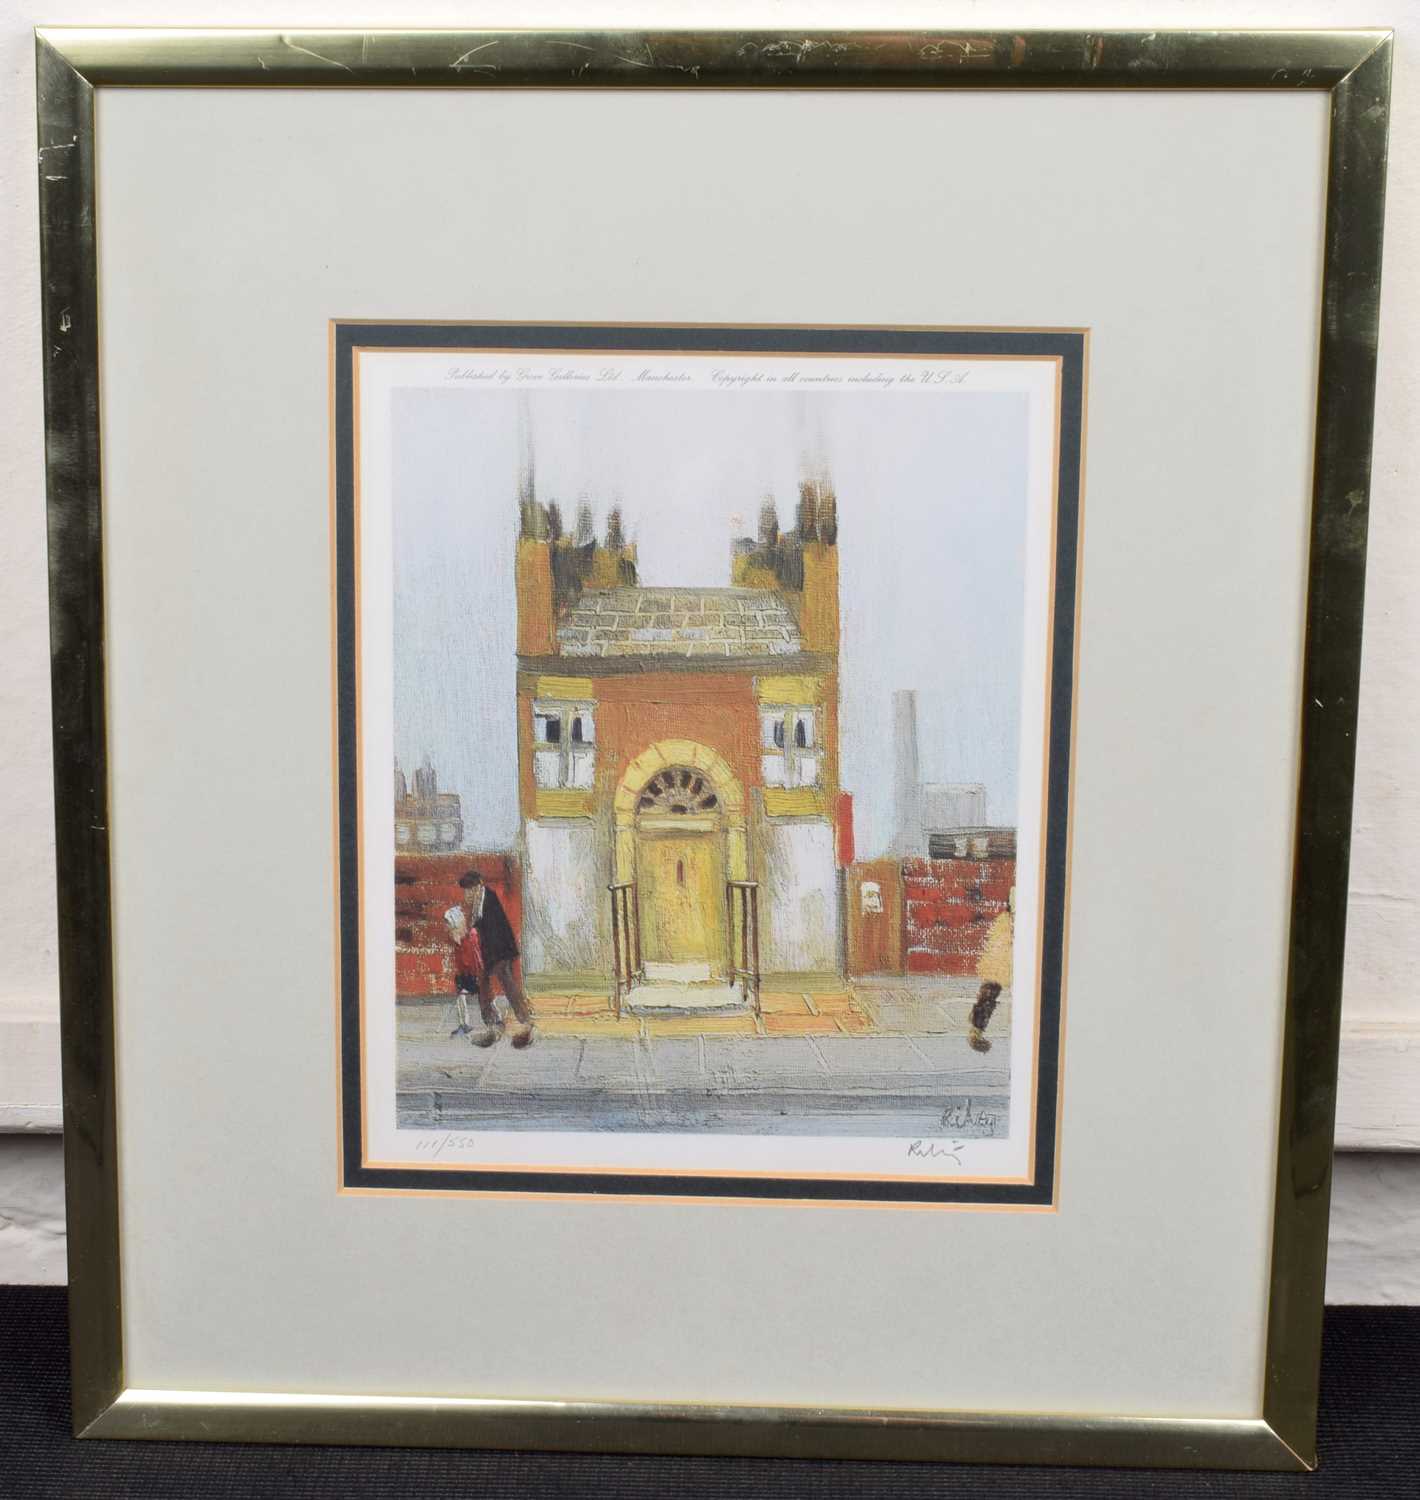 Harold Riley (British 1934-) "The Yellow Door", signed print. - Image 2 of 3